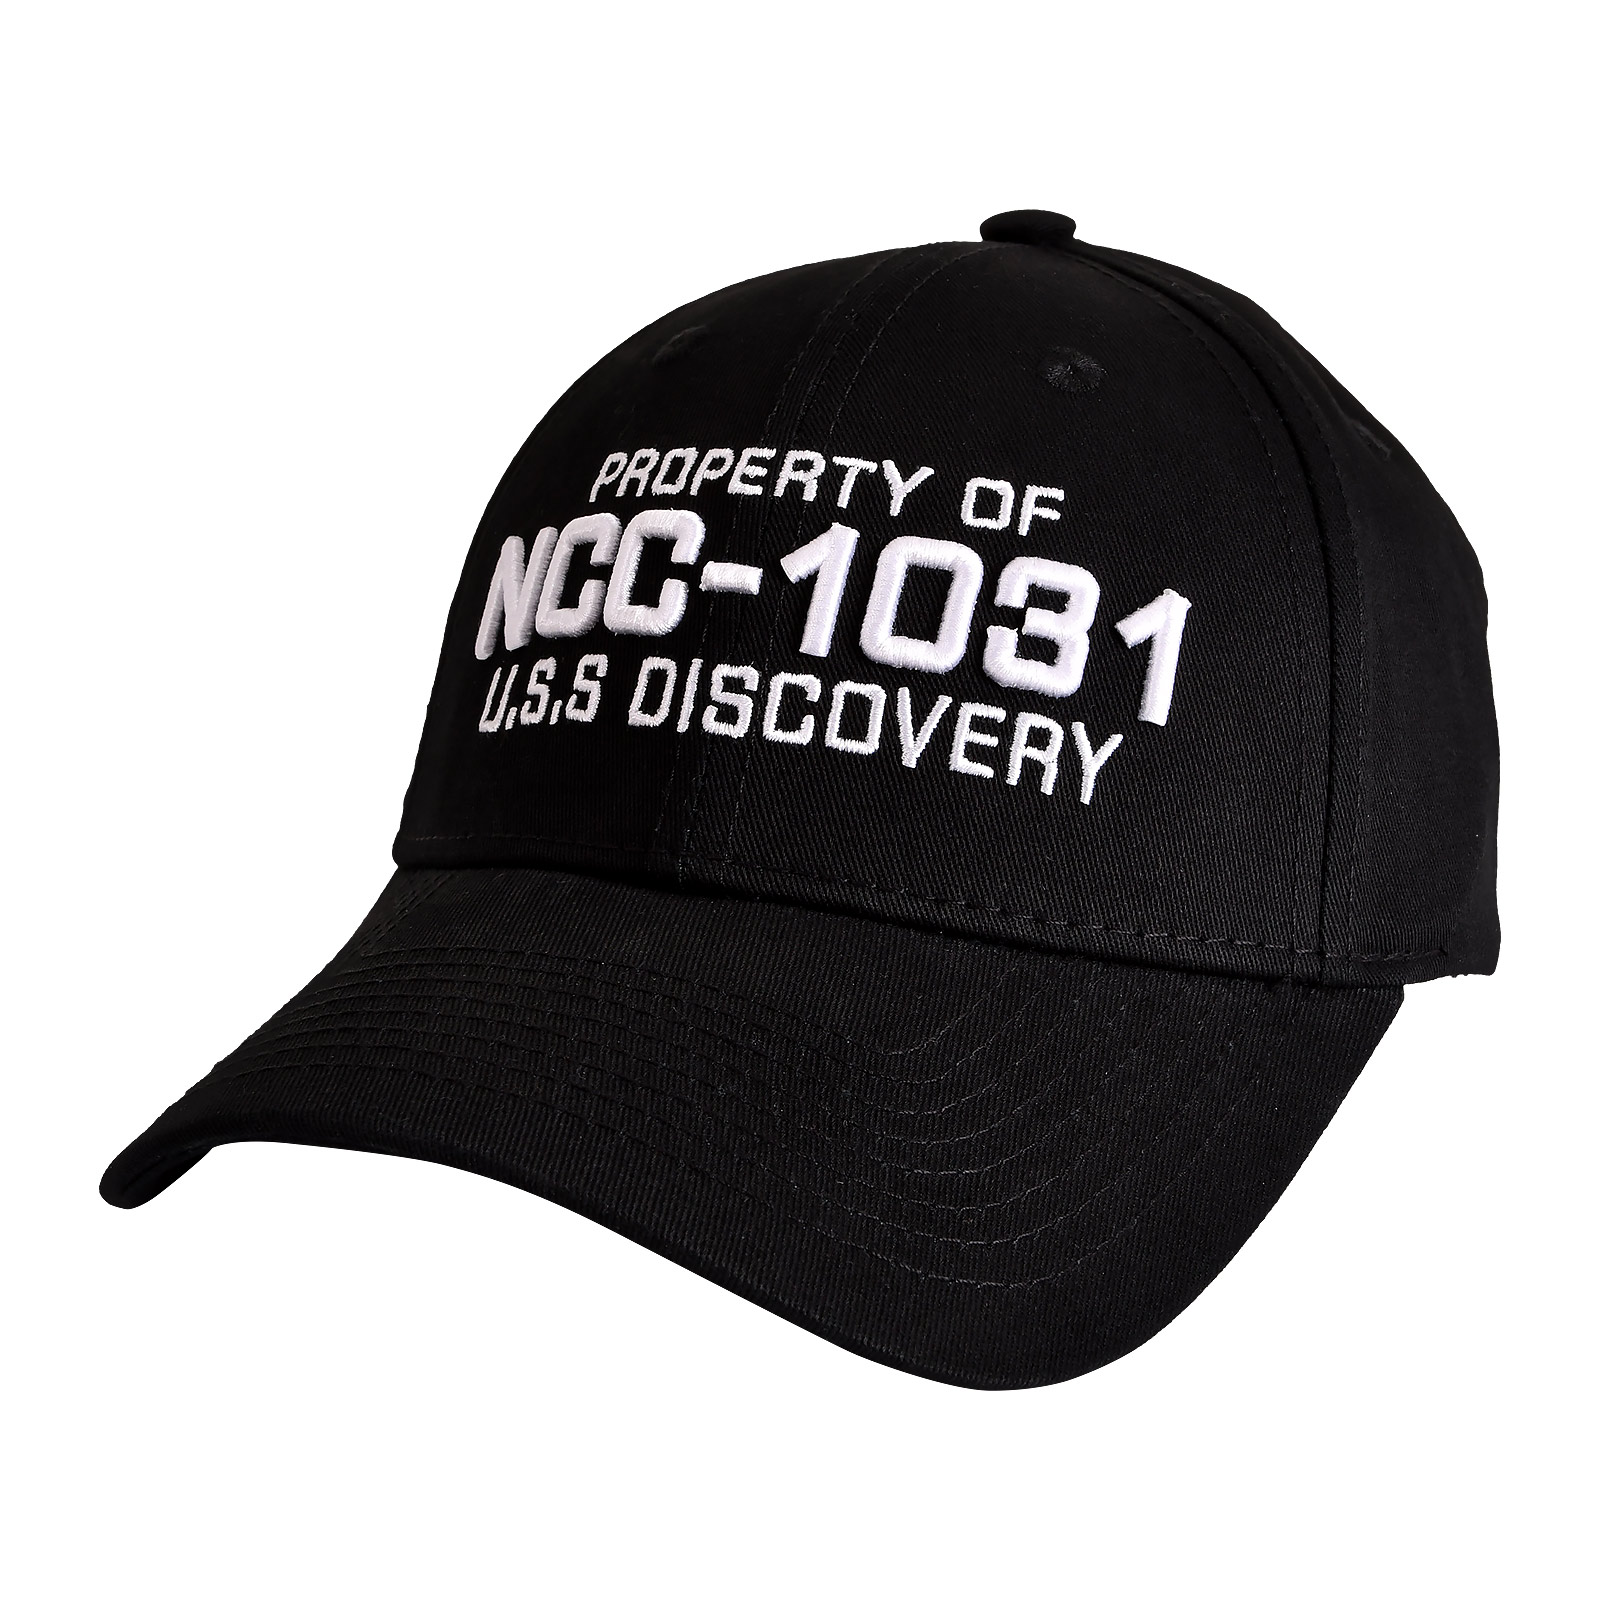 Star Trek - USS Discovery NCC-1031 Baseball Cap Black